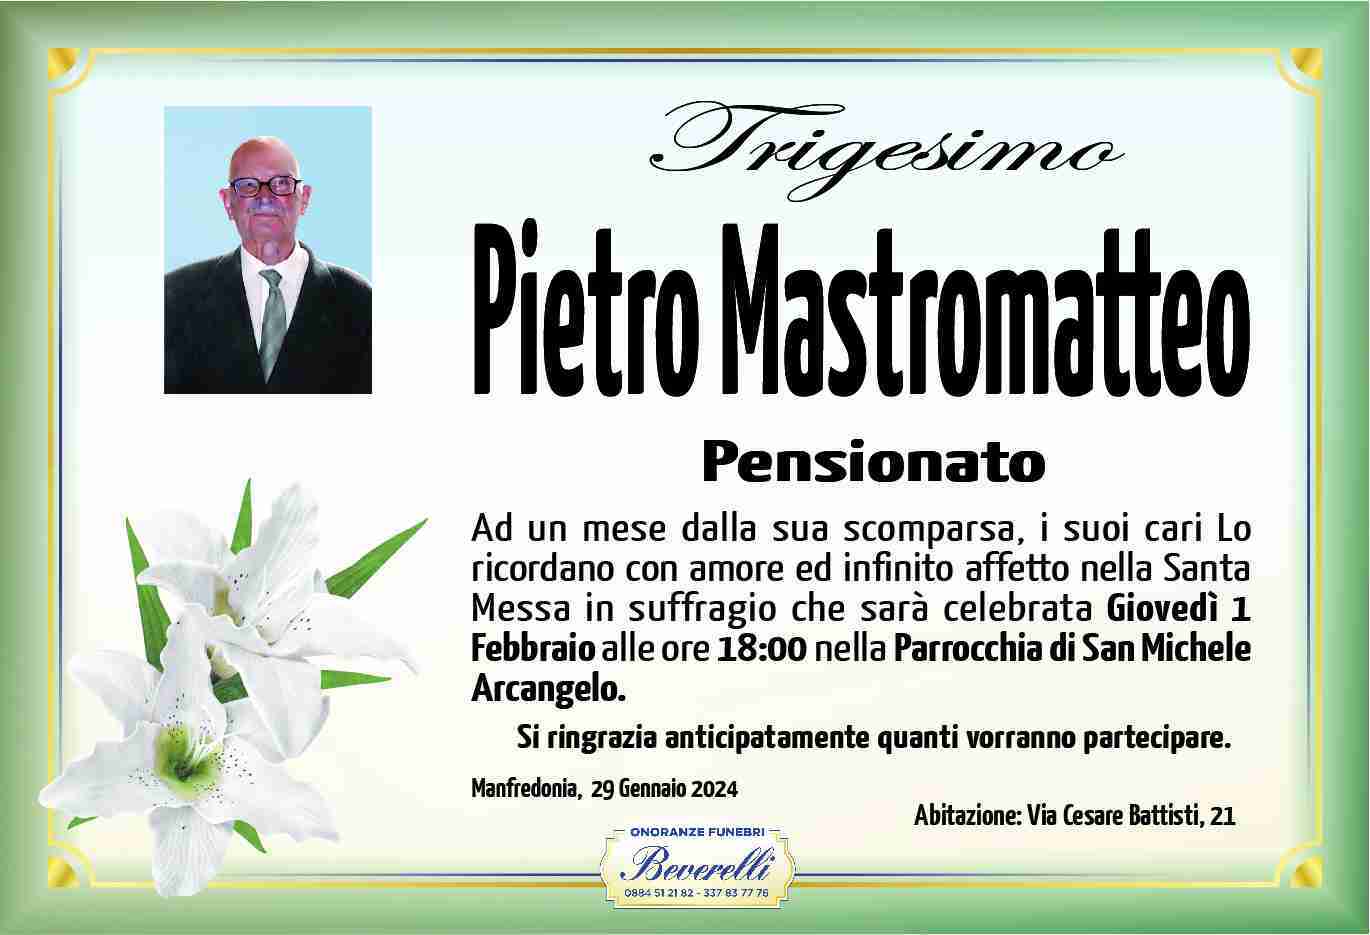 Pietro Mastromatteo